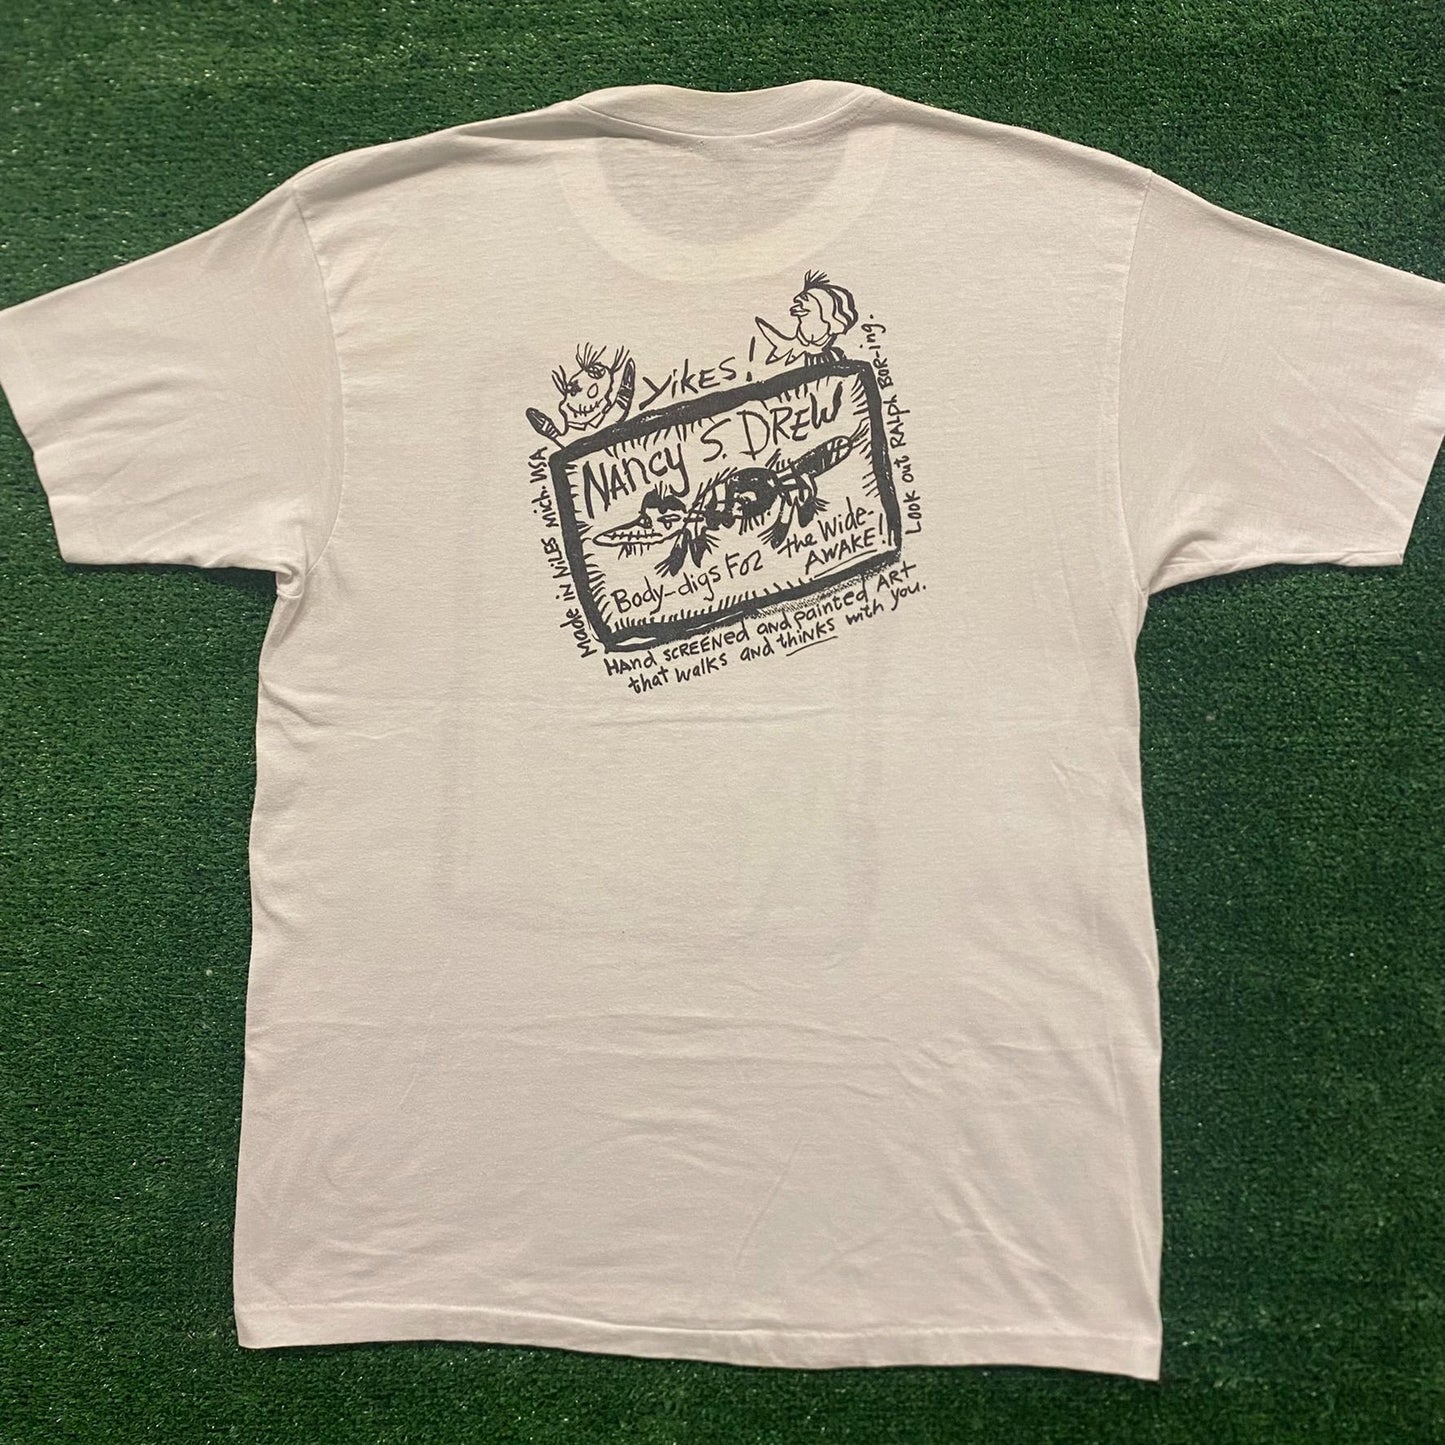 Nancy Drew Vintage 90s Art T-Shirt